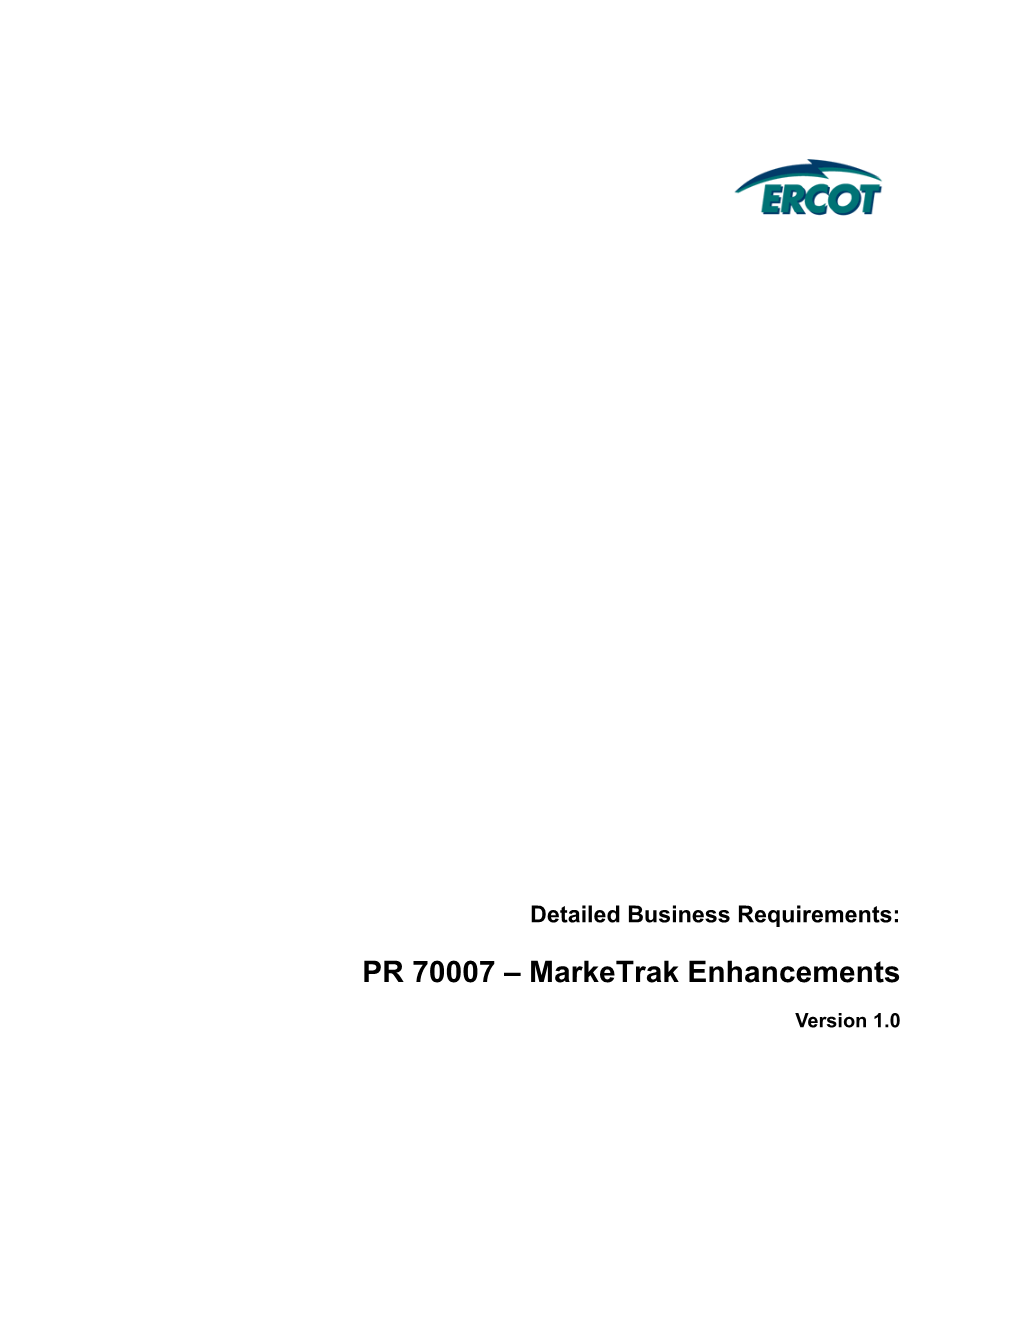 PR 70007 Marketrak Enhancements Detailed Business Requirements